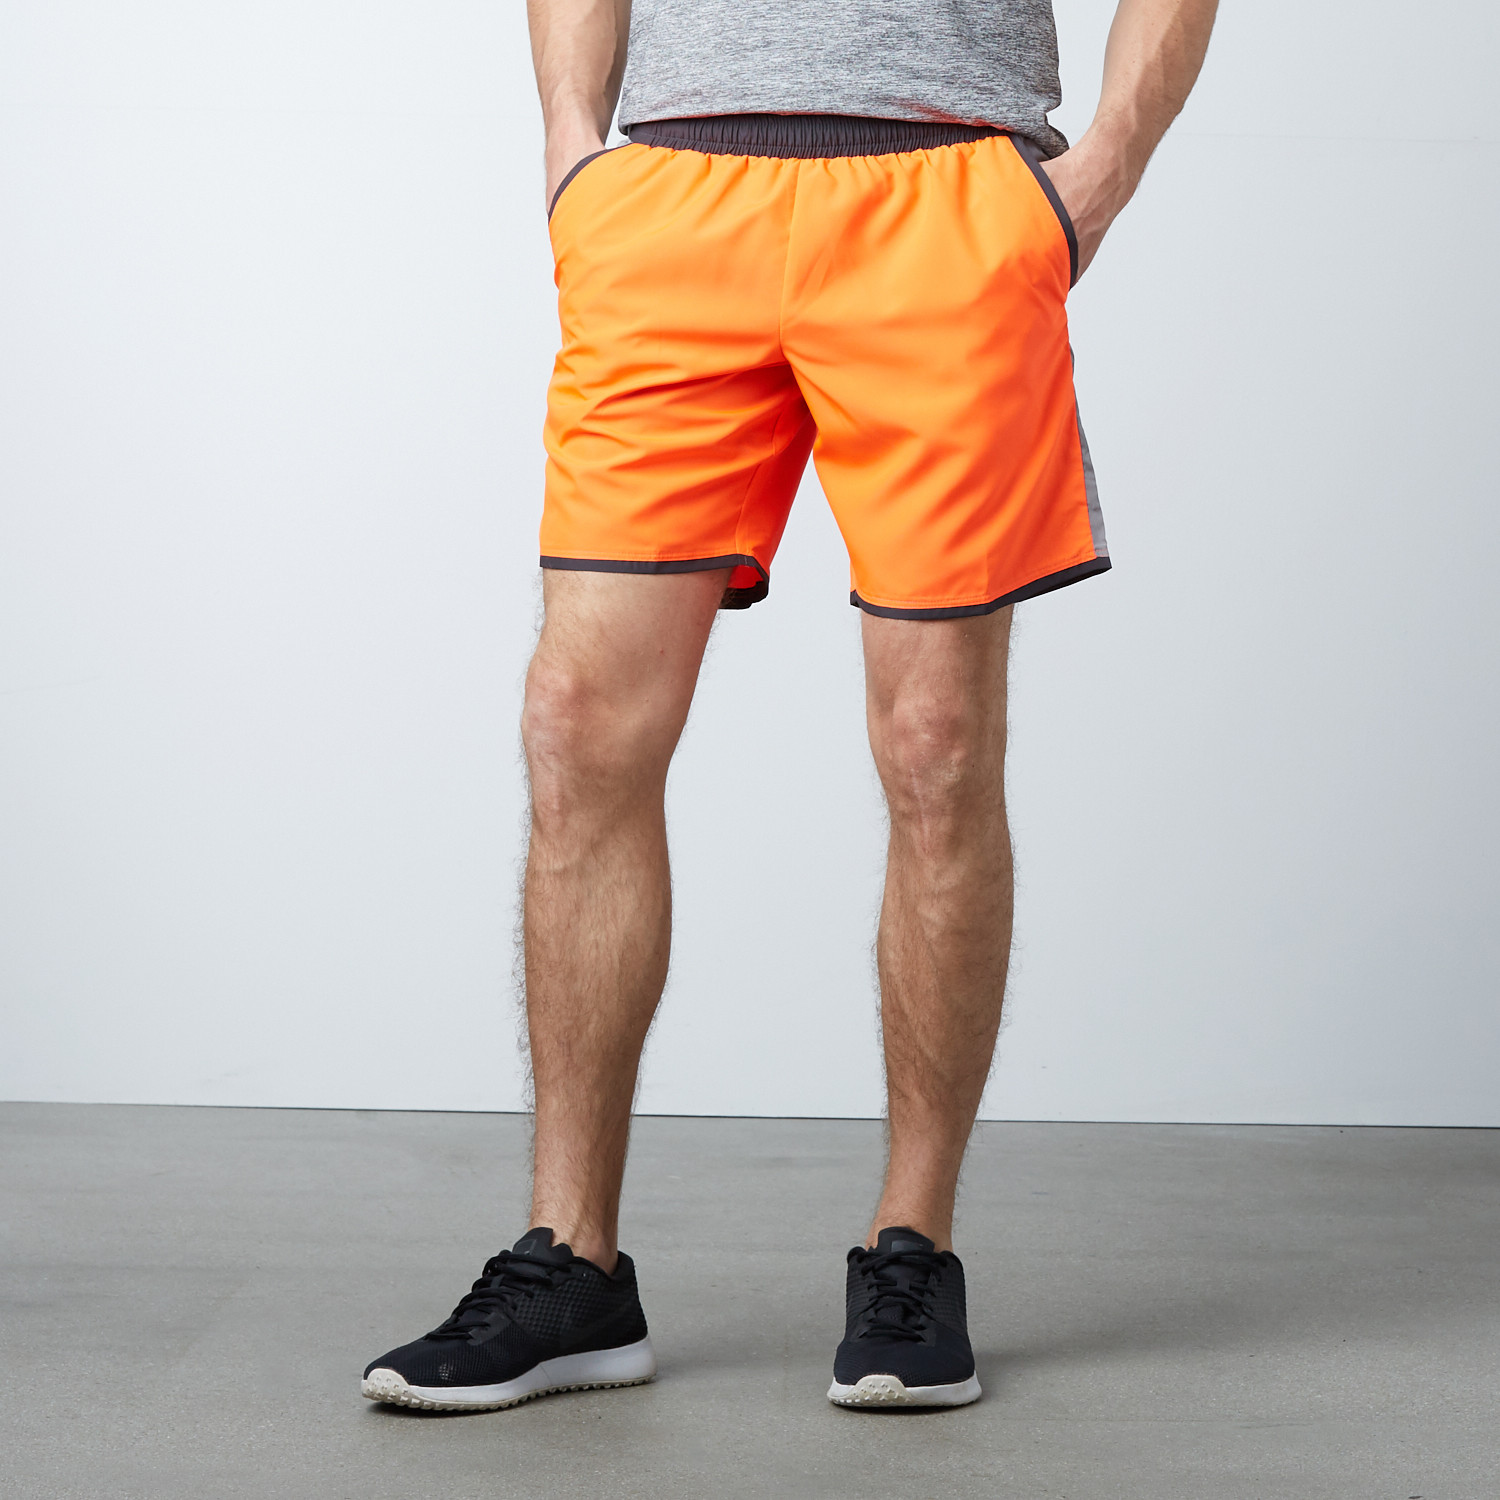 Dry Fit Sports Shorts + Zipper Back Pocket // Orange (S) - TrueREVO ...